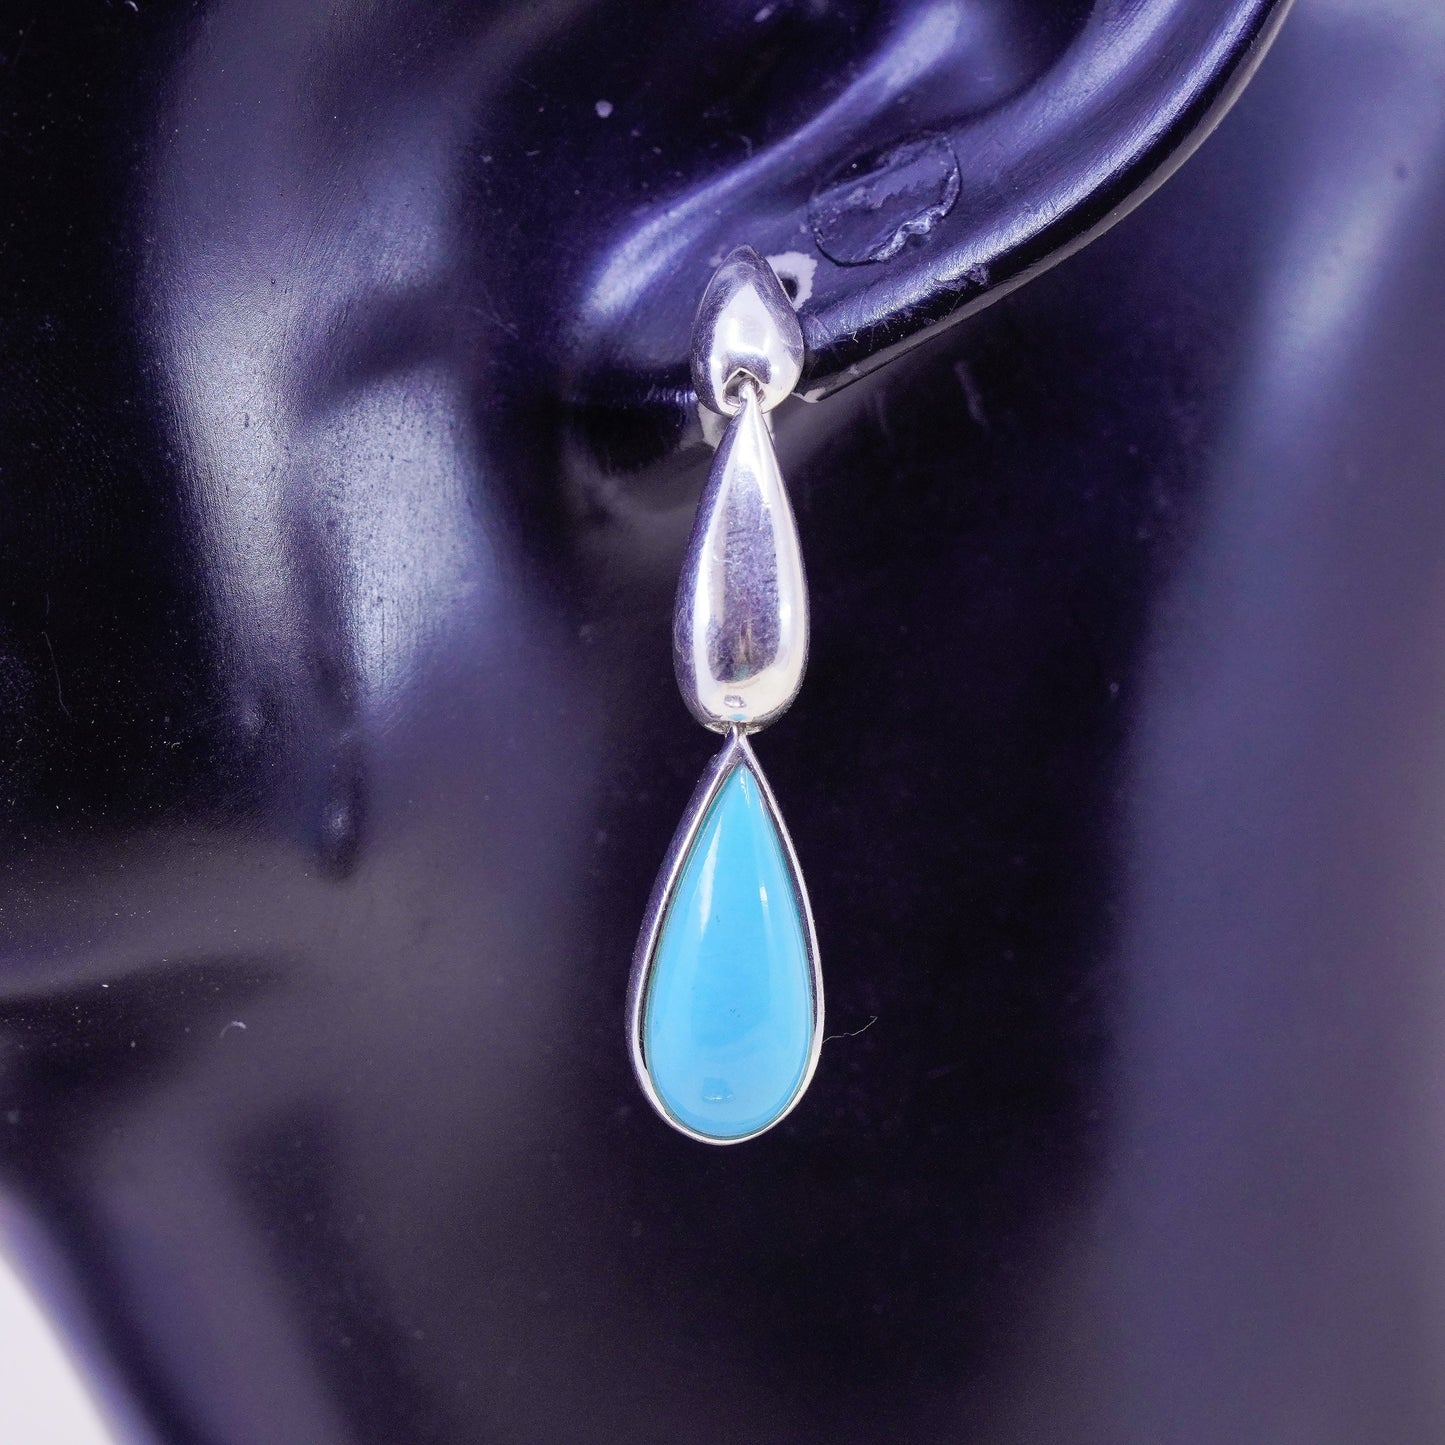 Vintage sterling 925 silver handmade teardrop earrings with turquoise